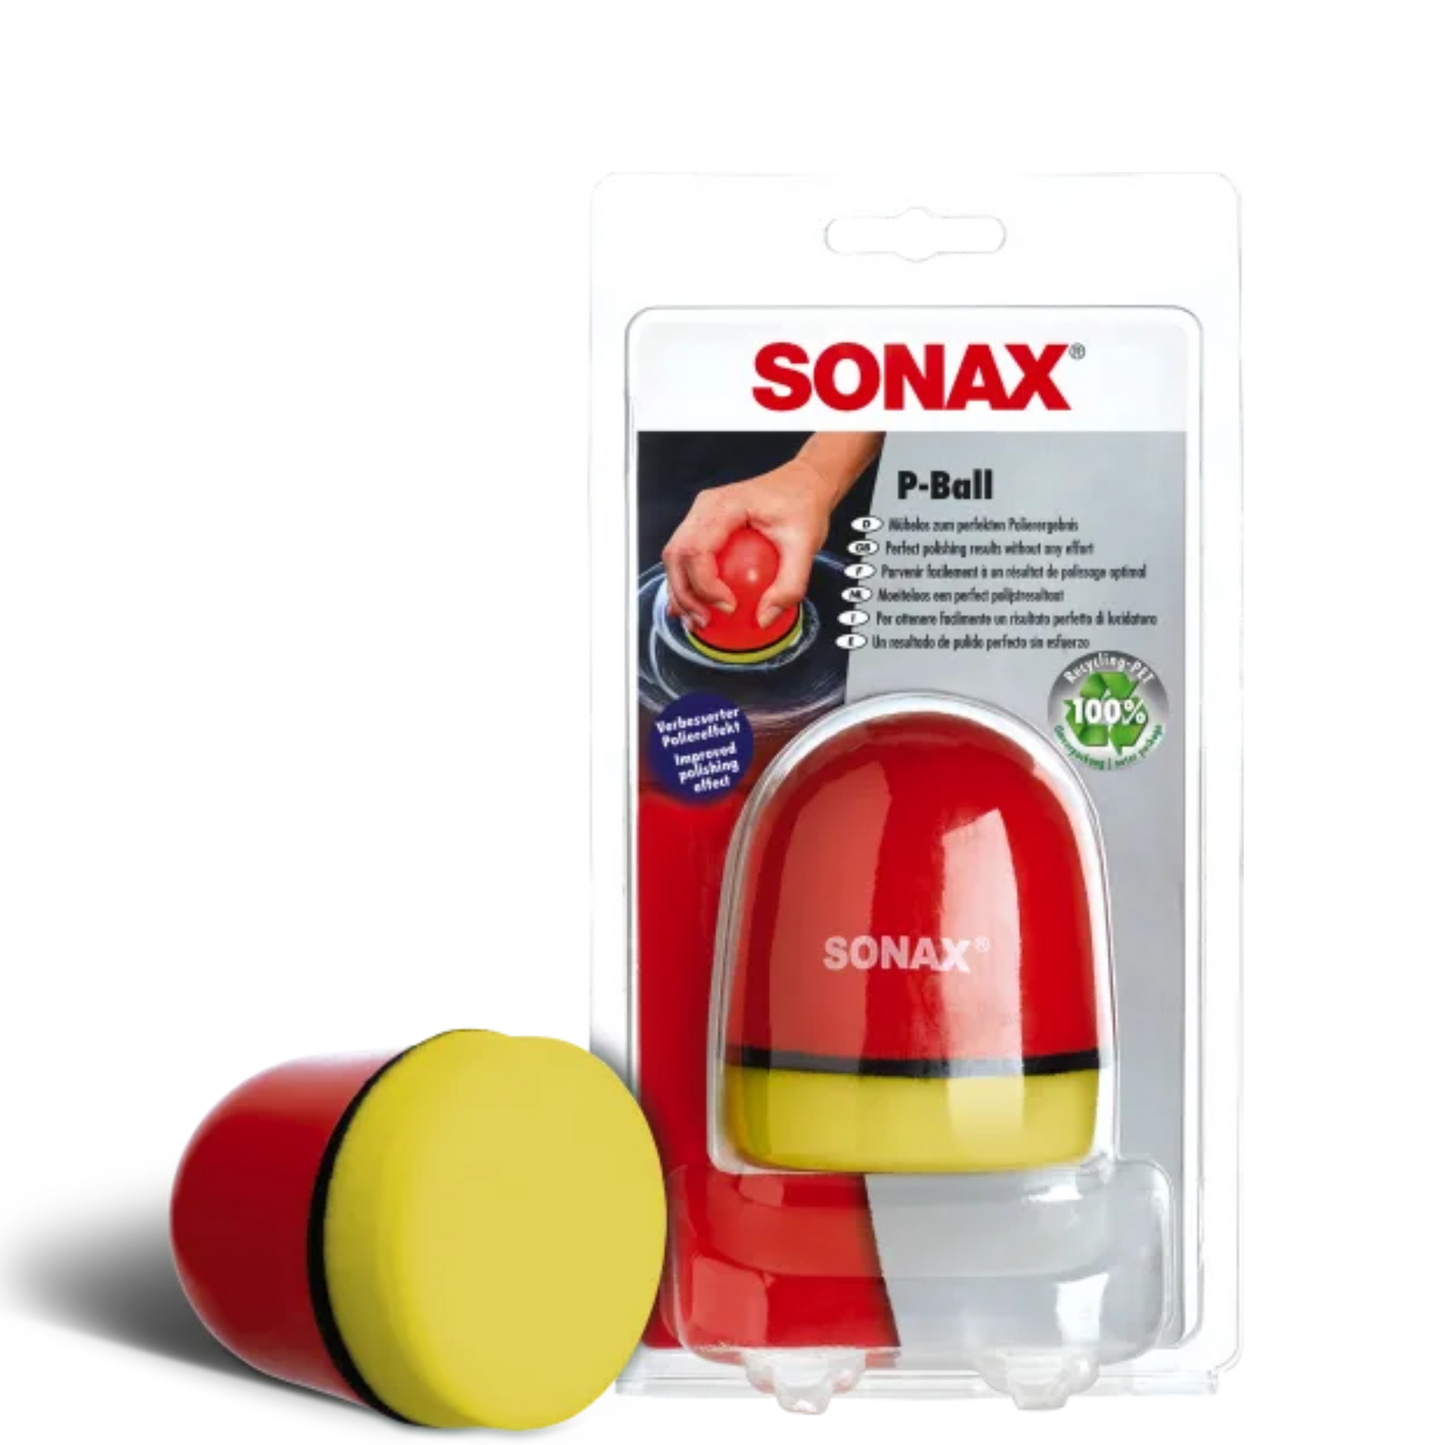 SONAX P-Ball